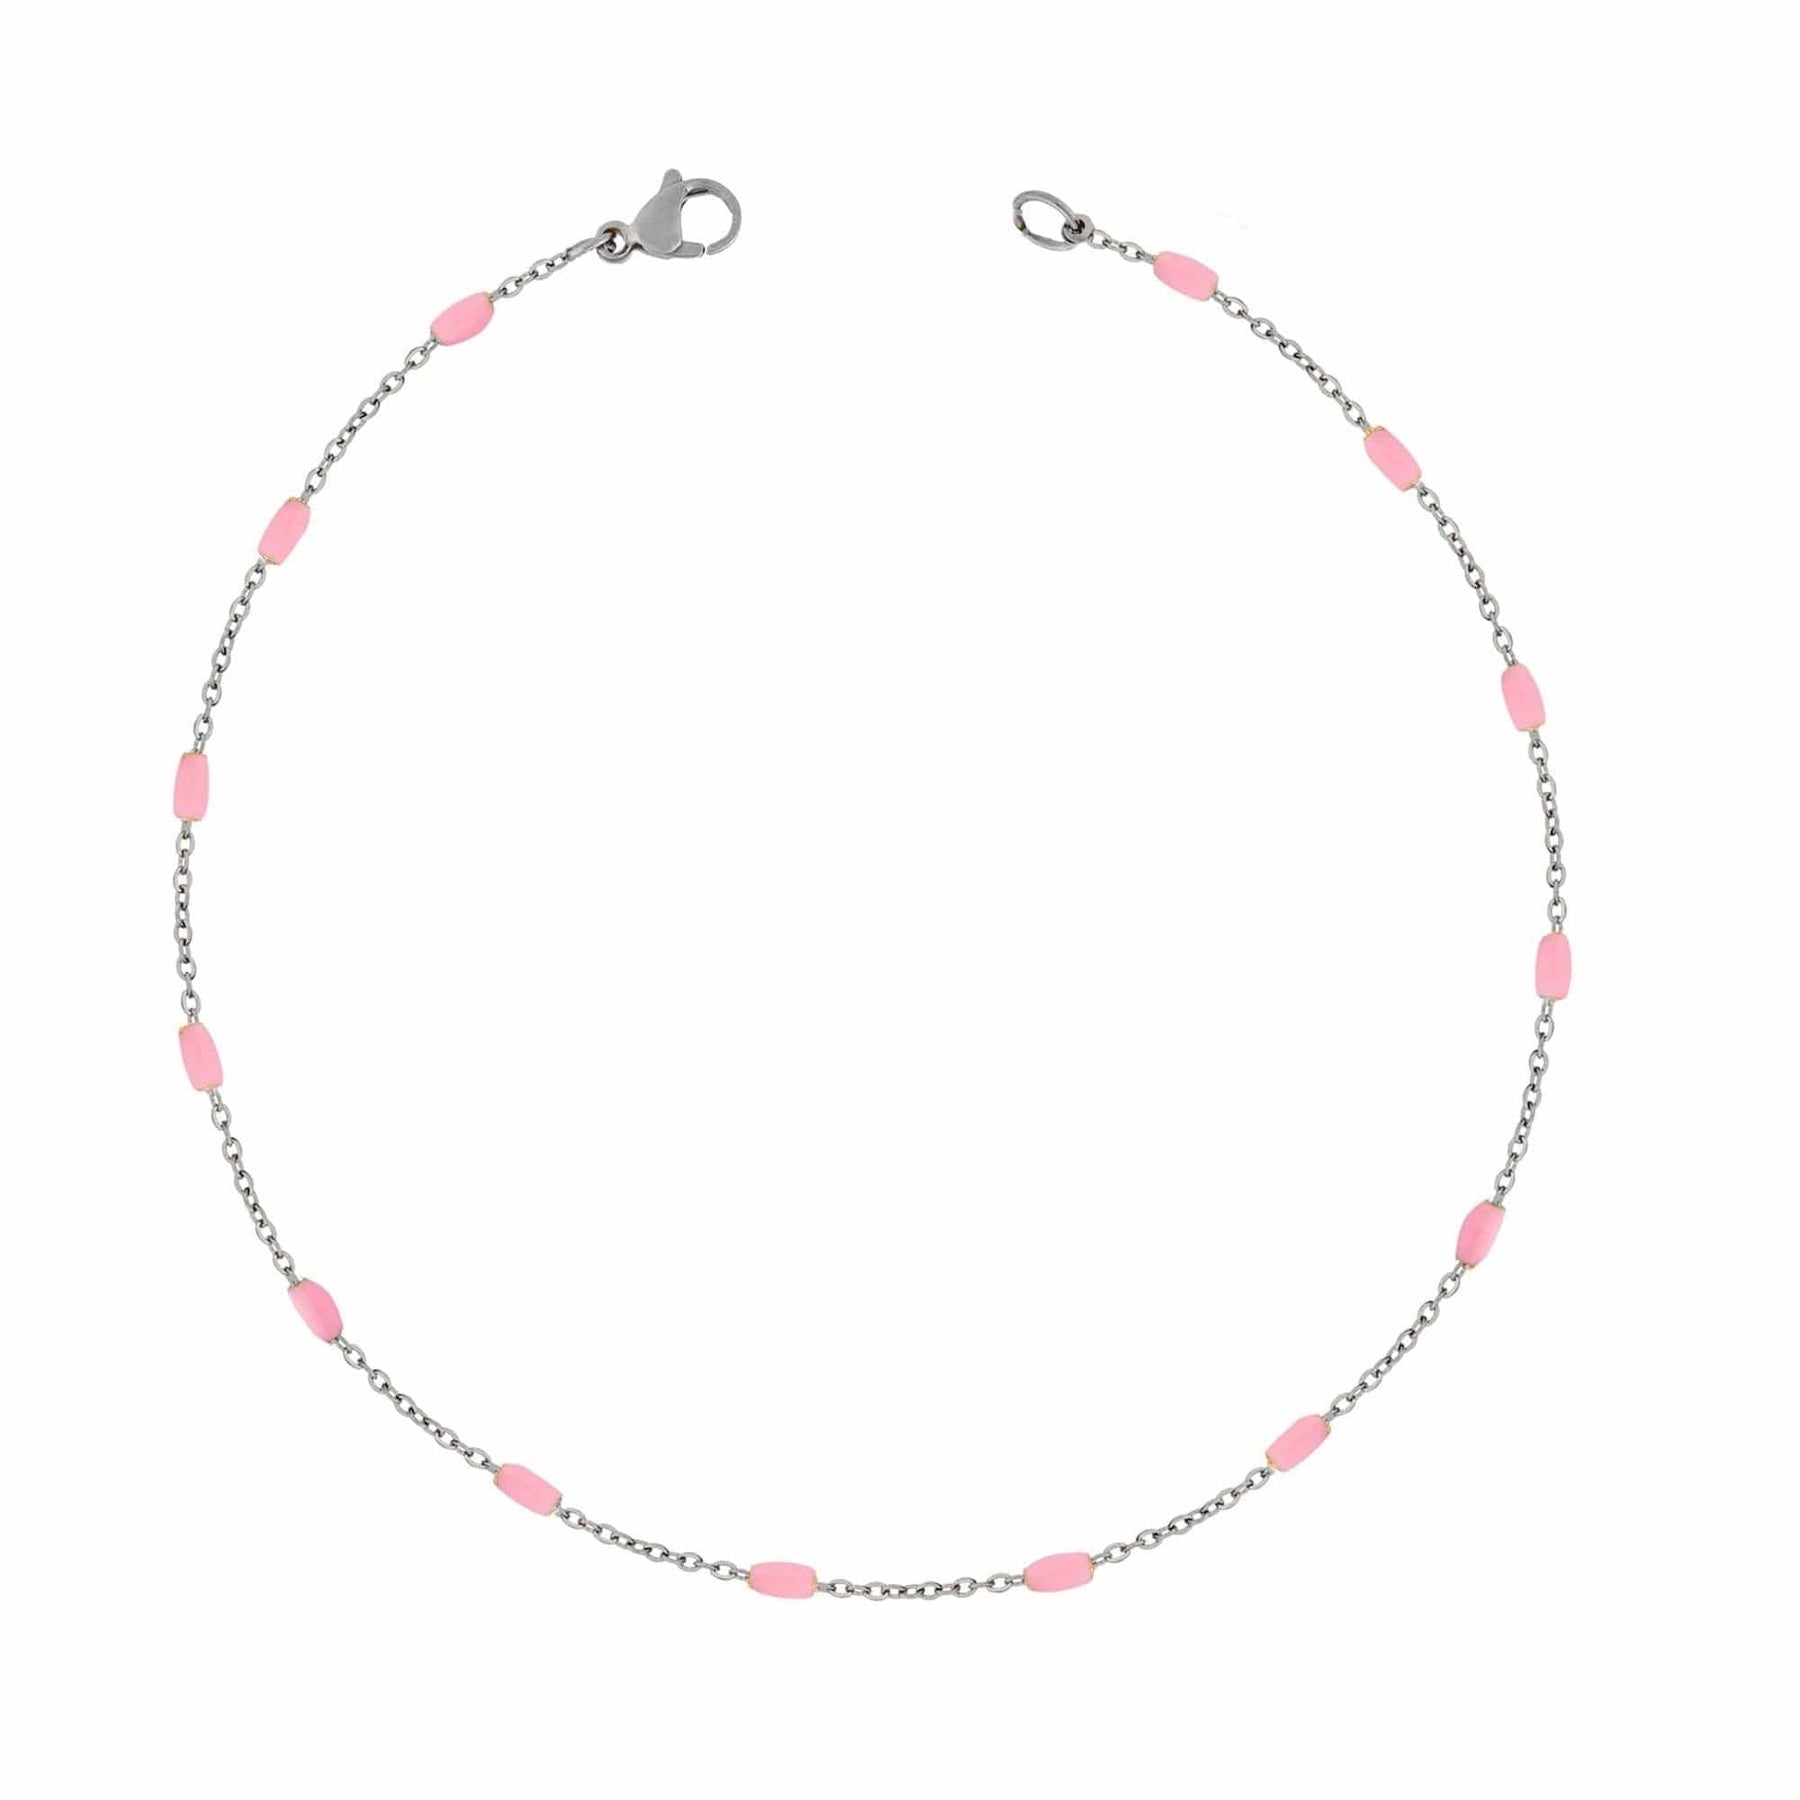 BohoMoon Stainless Steel Seabreeze Bracelet Silver / Pink / Small